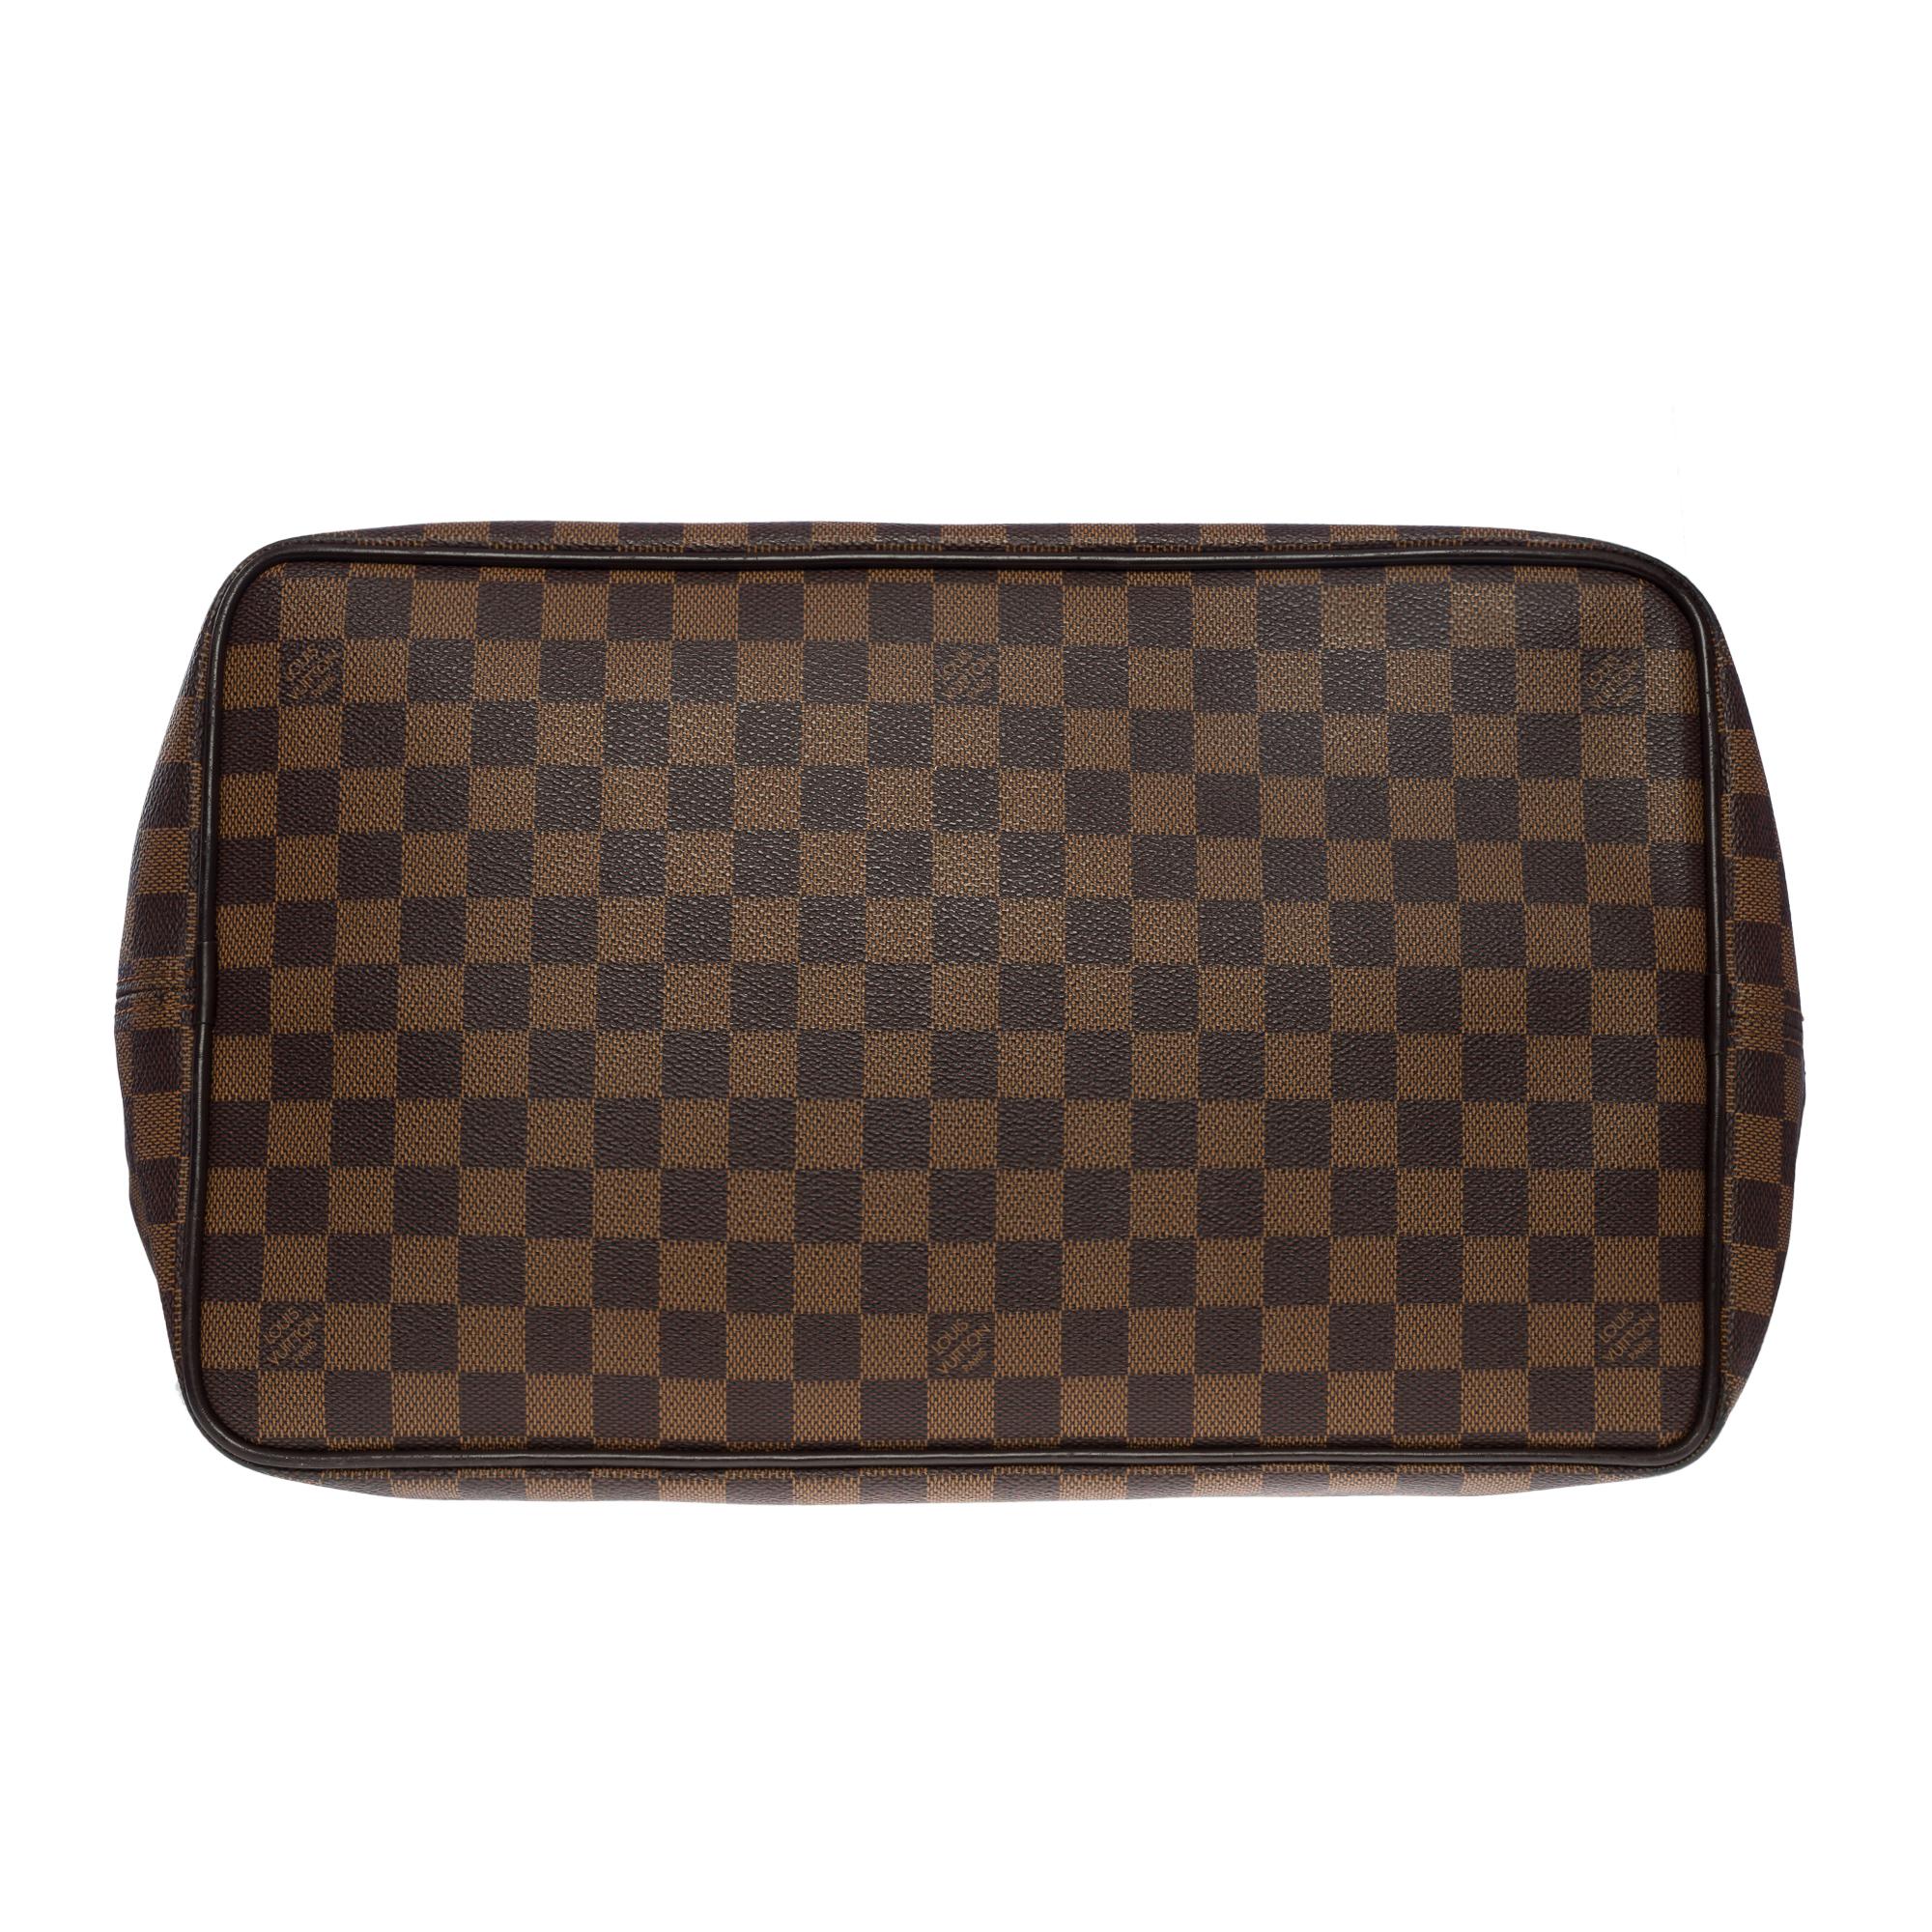 Louis Vuitton Neo Greenwich travel bag in brown canvas, golden hardware 5